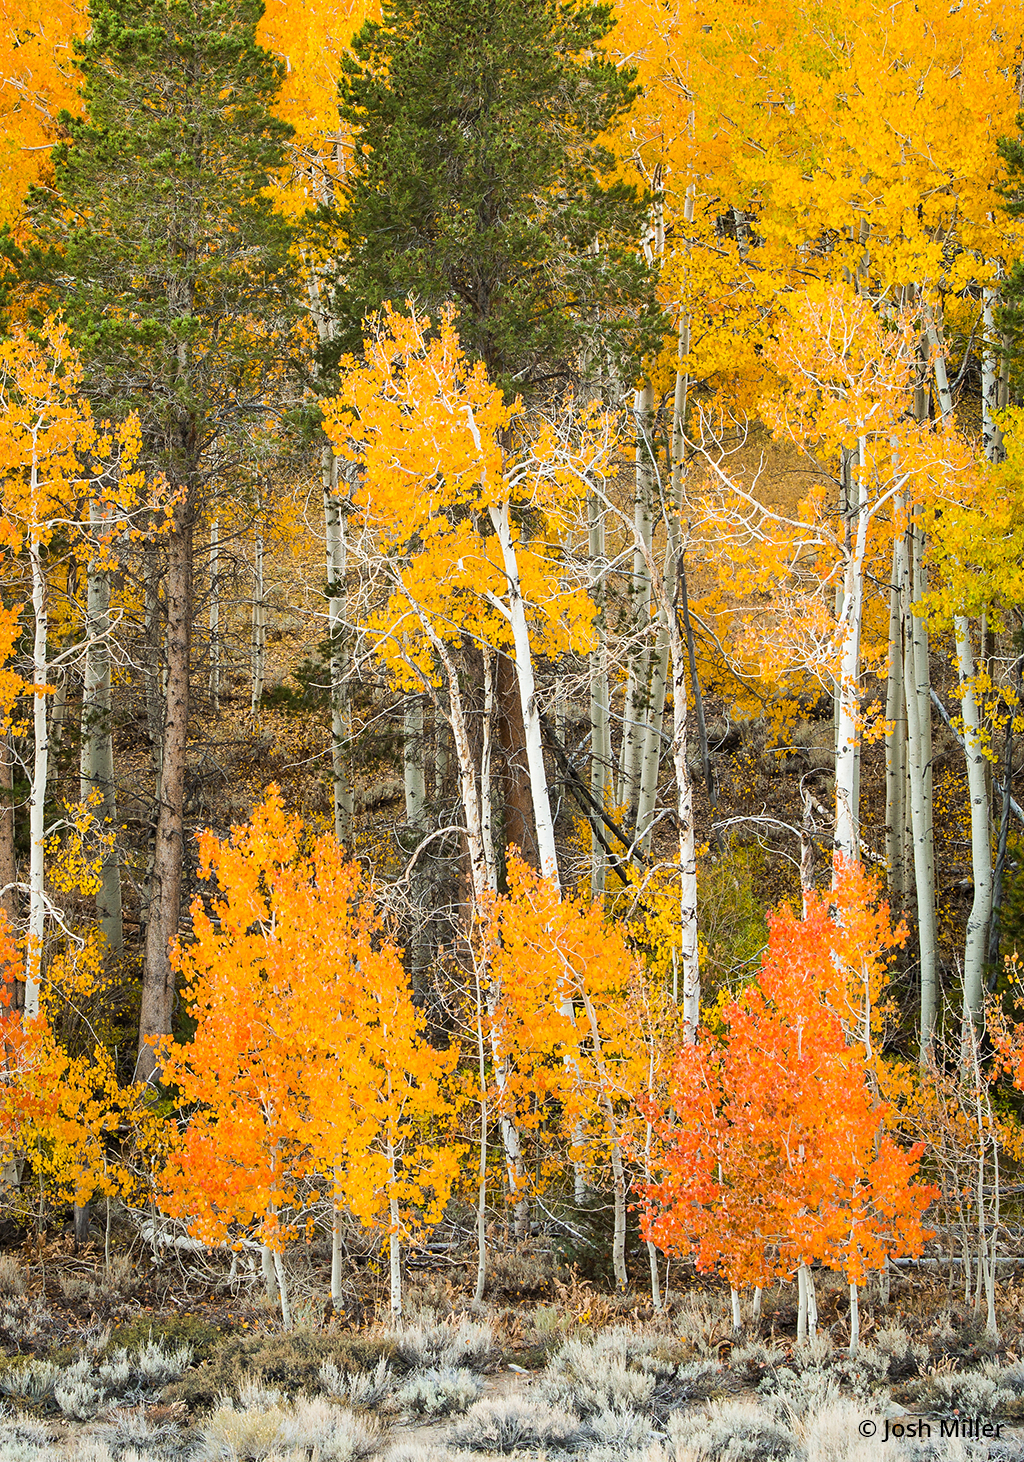 Photo of orange and yellow fall foliage